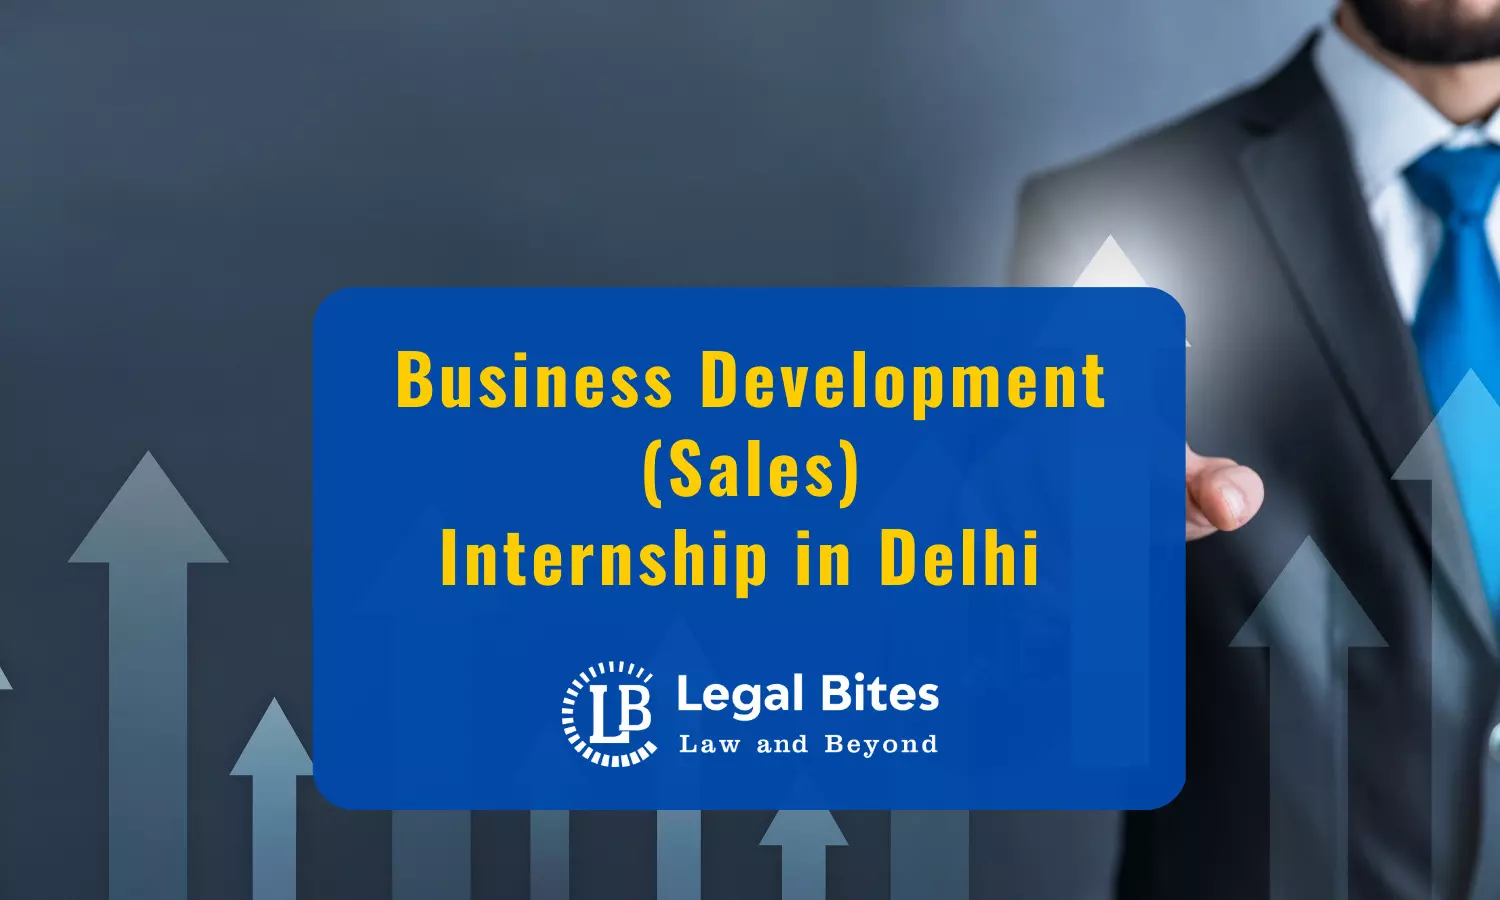 Business Development (Sales) Internship in Delhi at Legal Bites